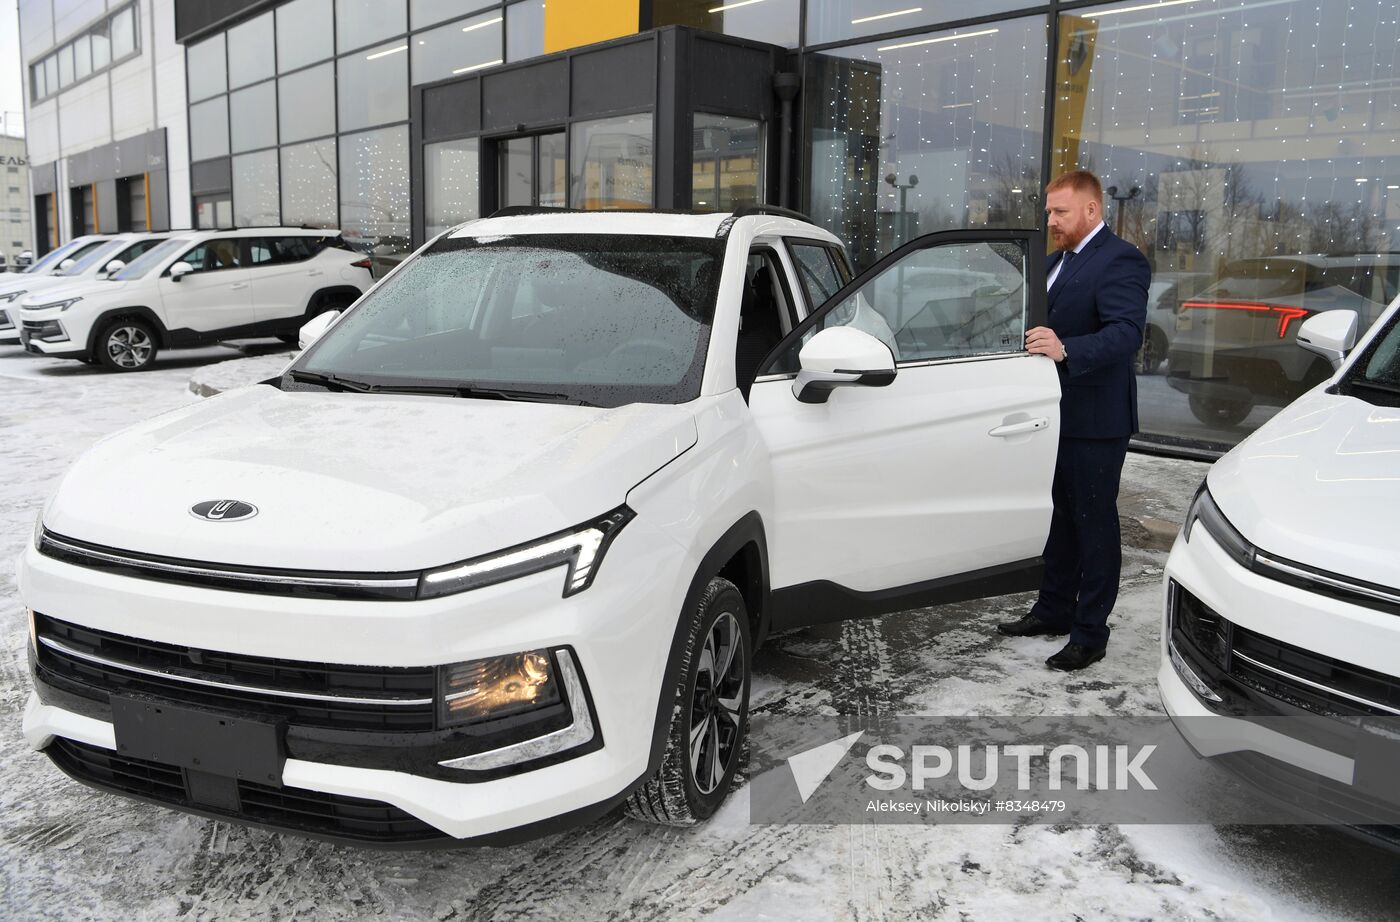 Russia New Car Sales